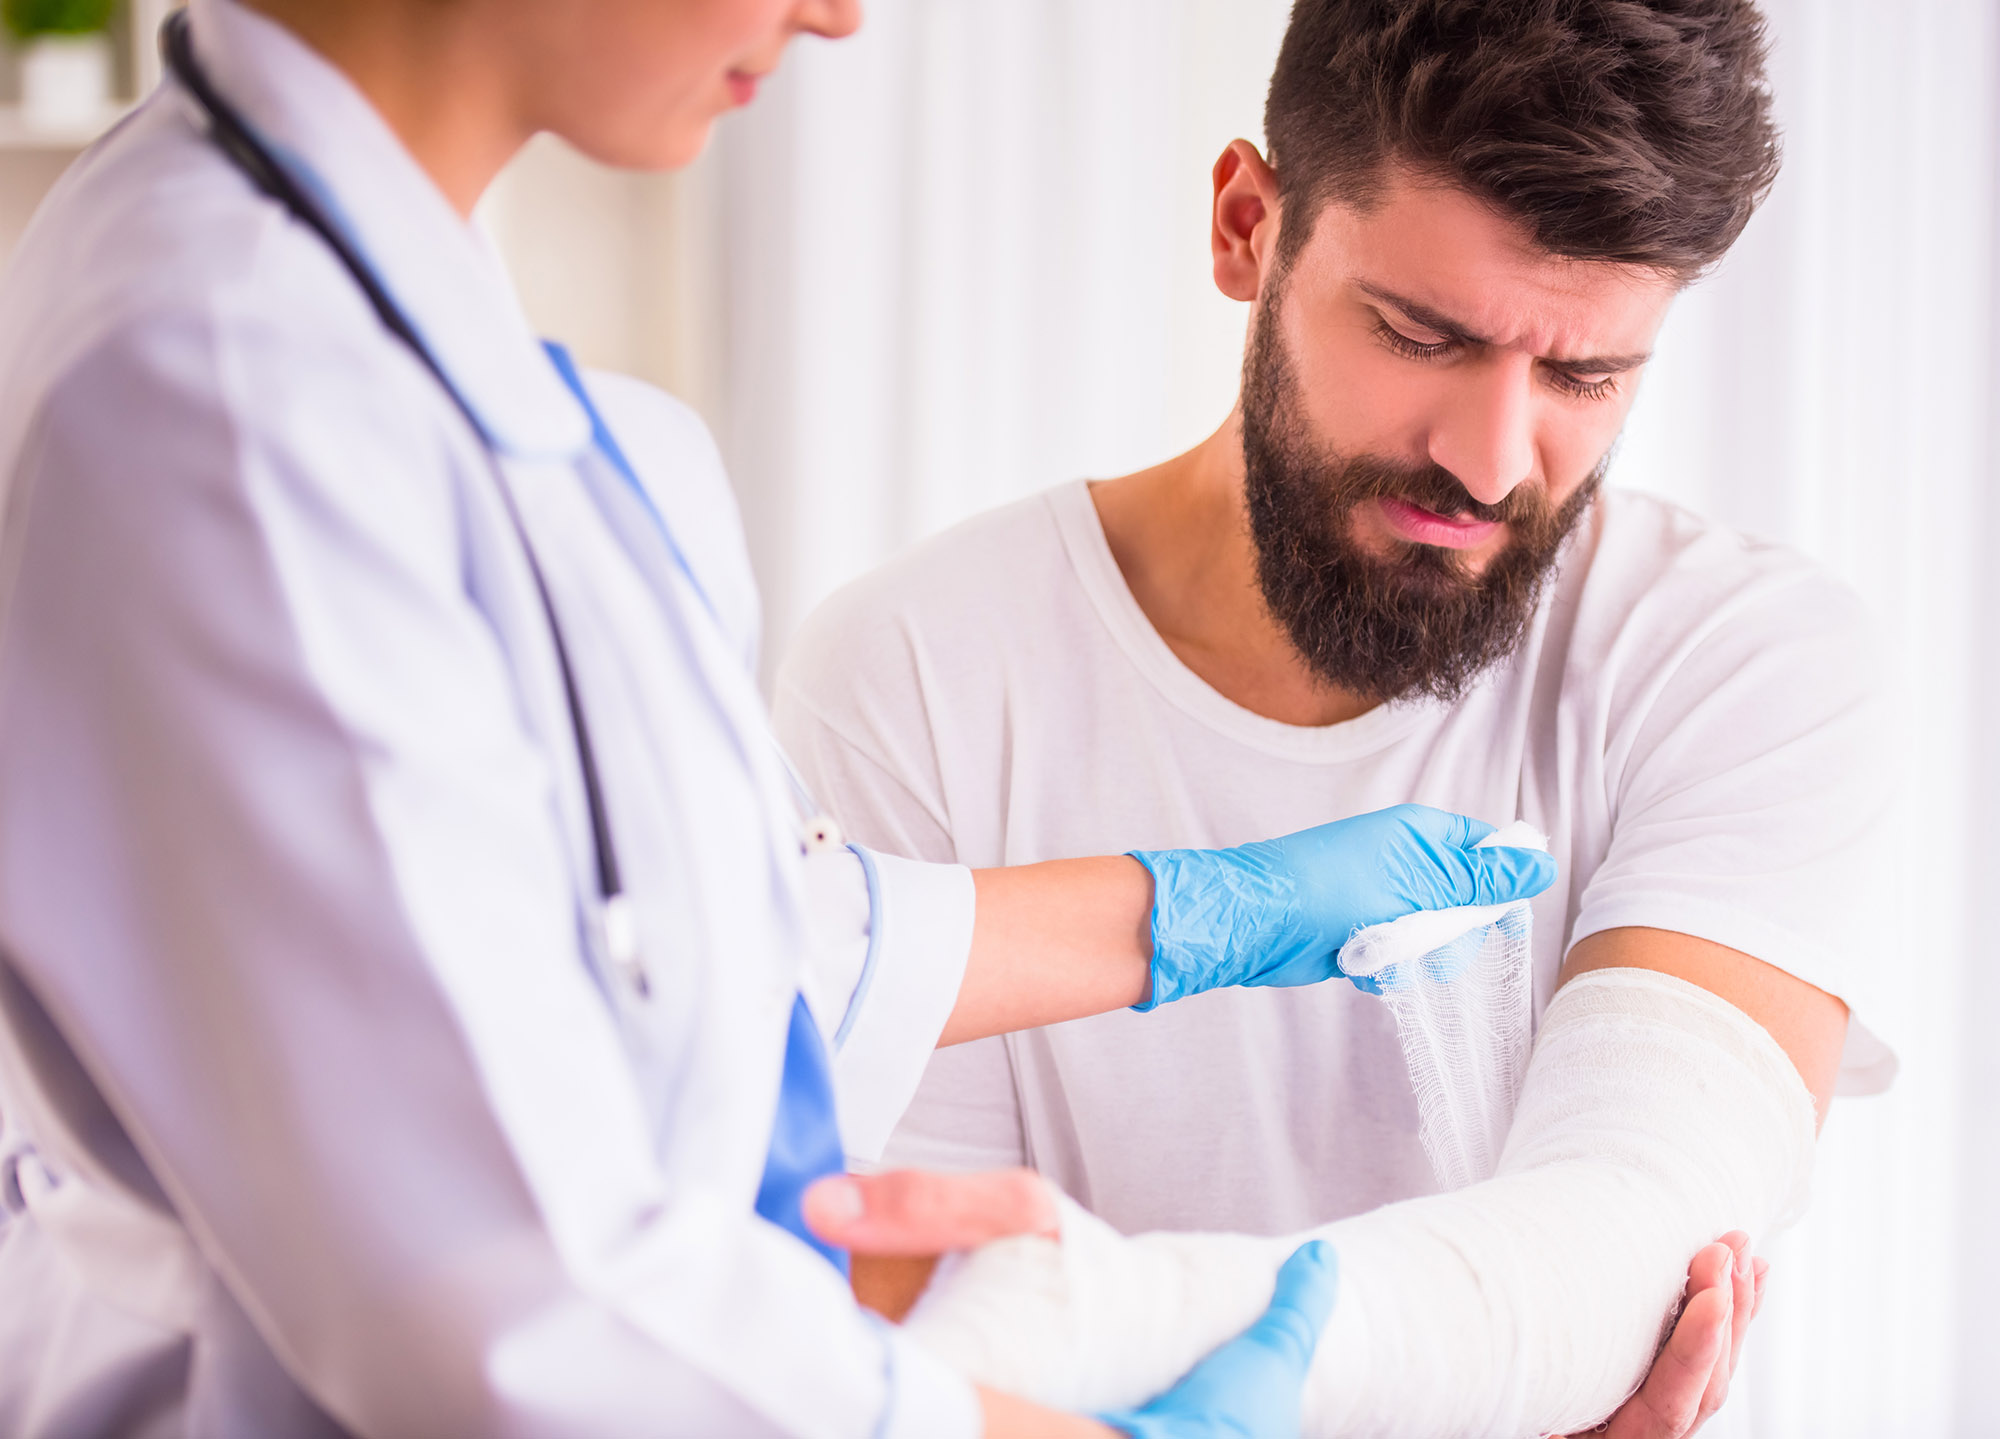 arm injury compensation broken arm solicitors Cardiff